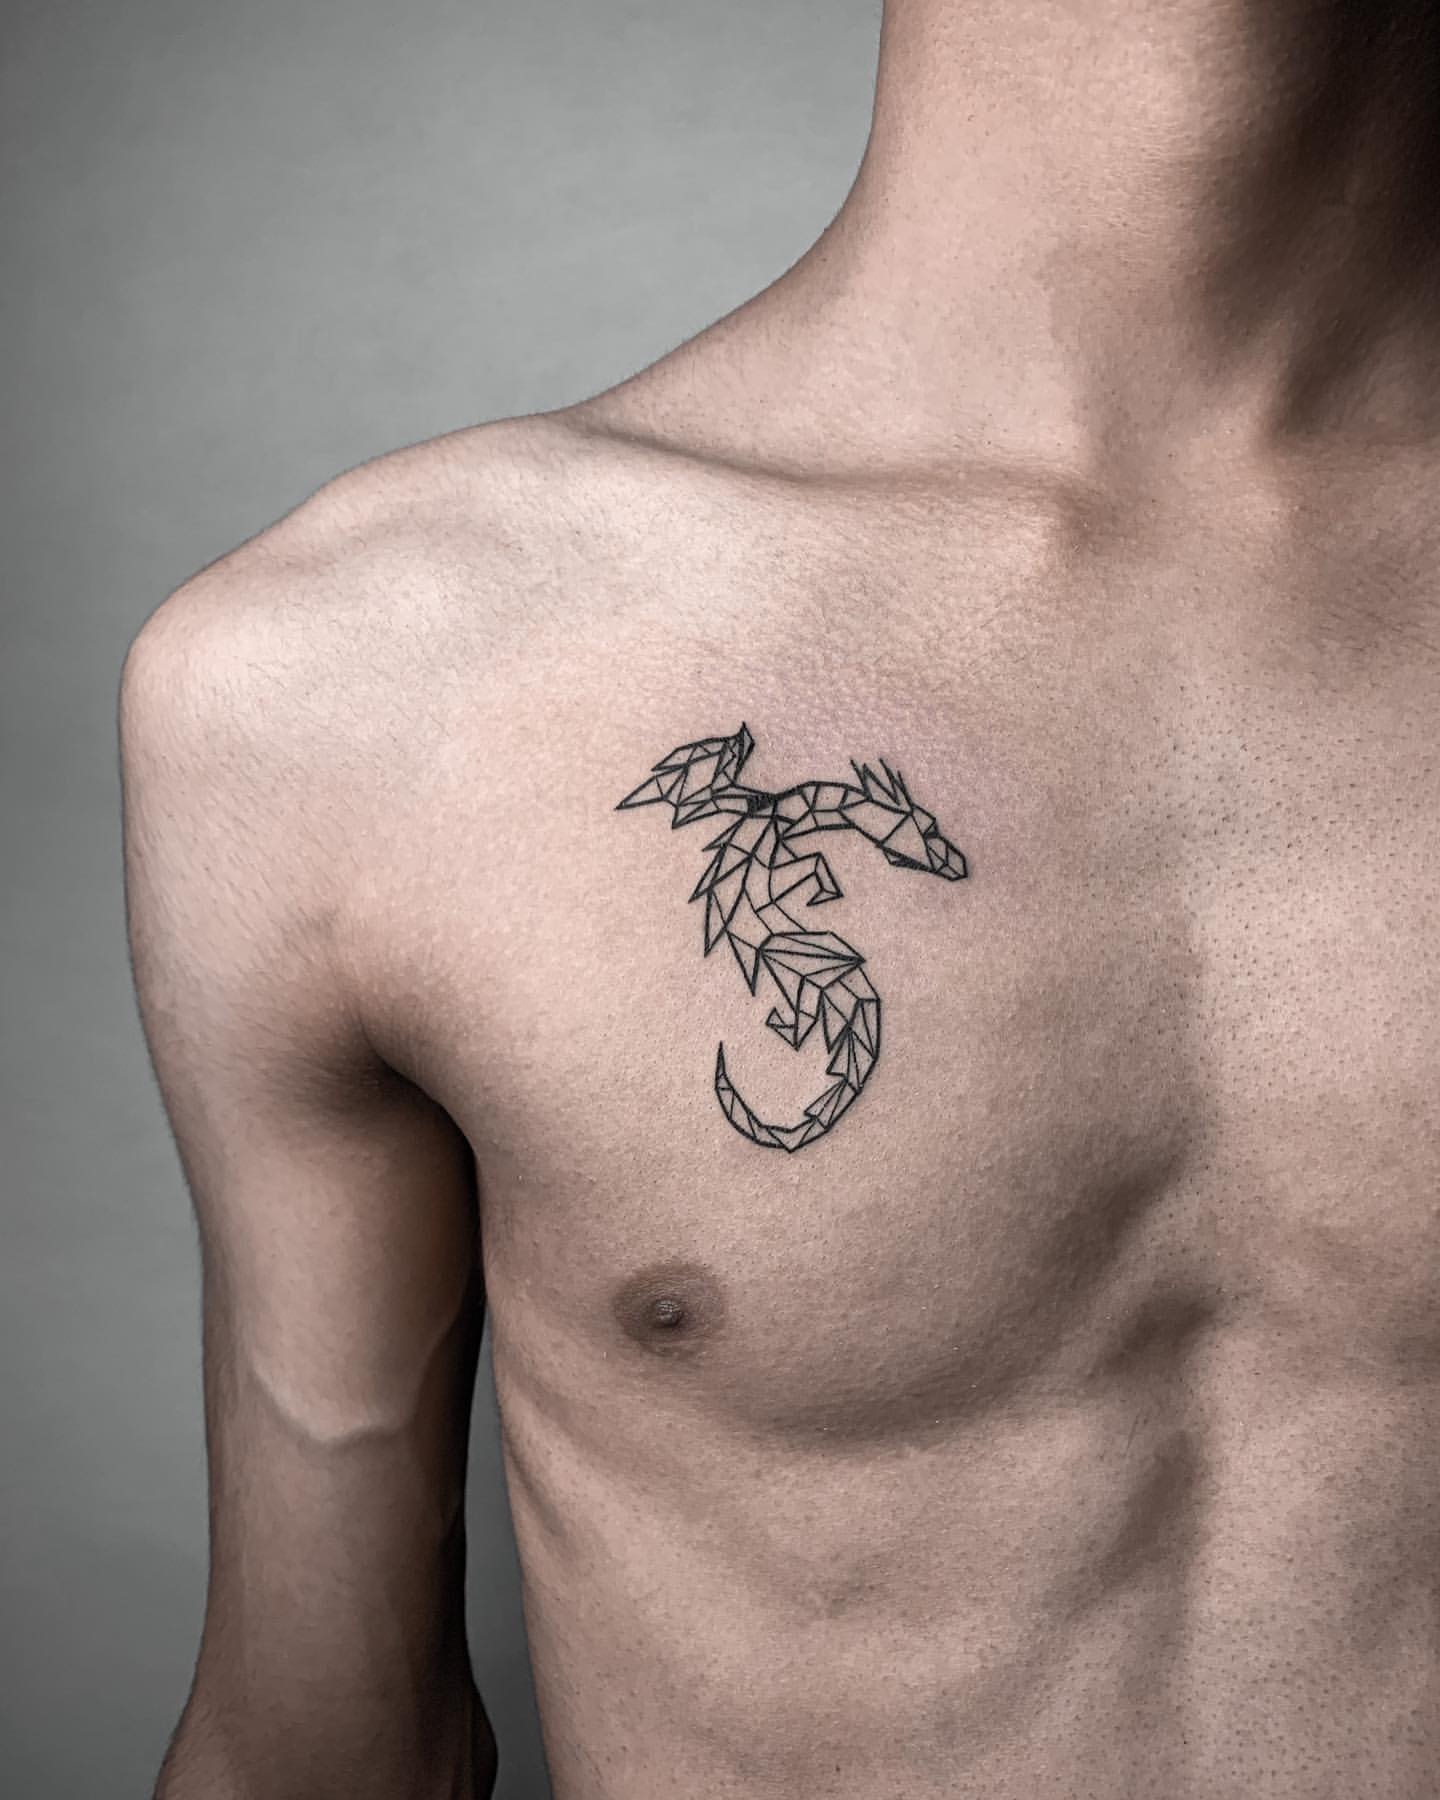 Mens Tattoos - Tattoo Ideas For Men on Tumblr